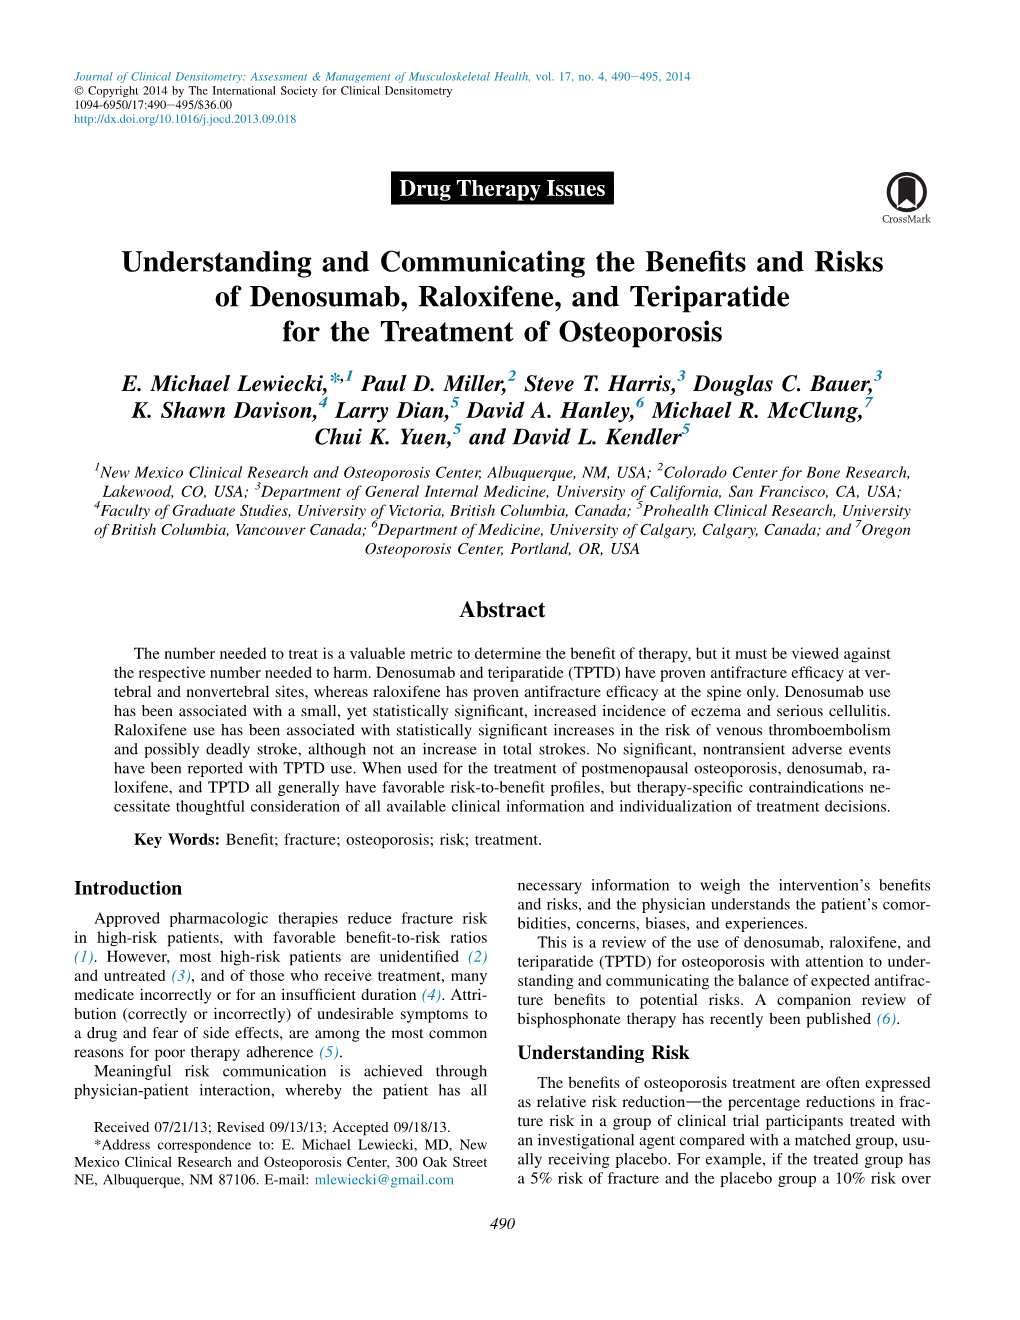 Denosumab, Raloxifene, and Teriparatide for the Treatment of Osteoporosis